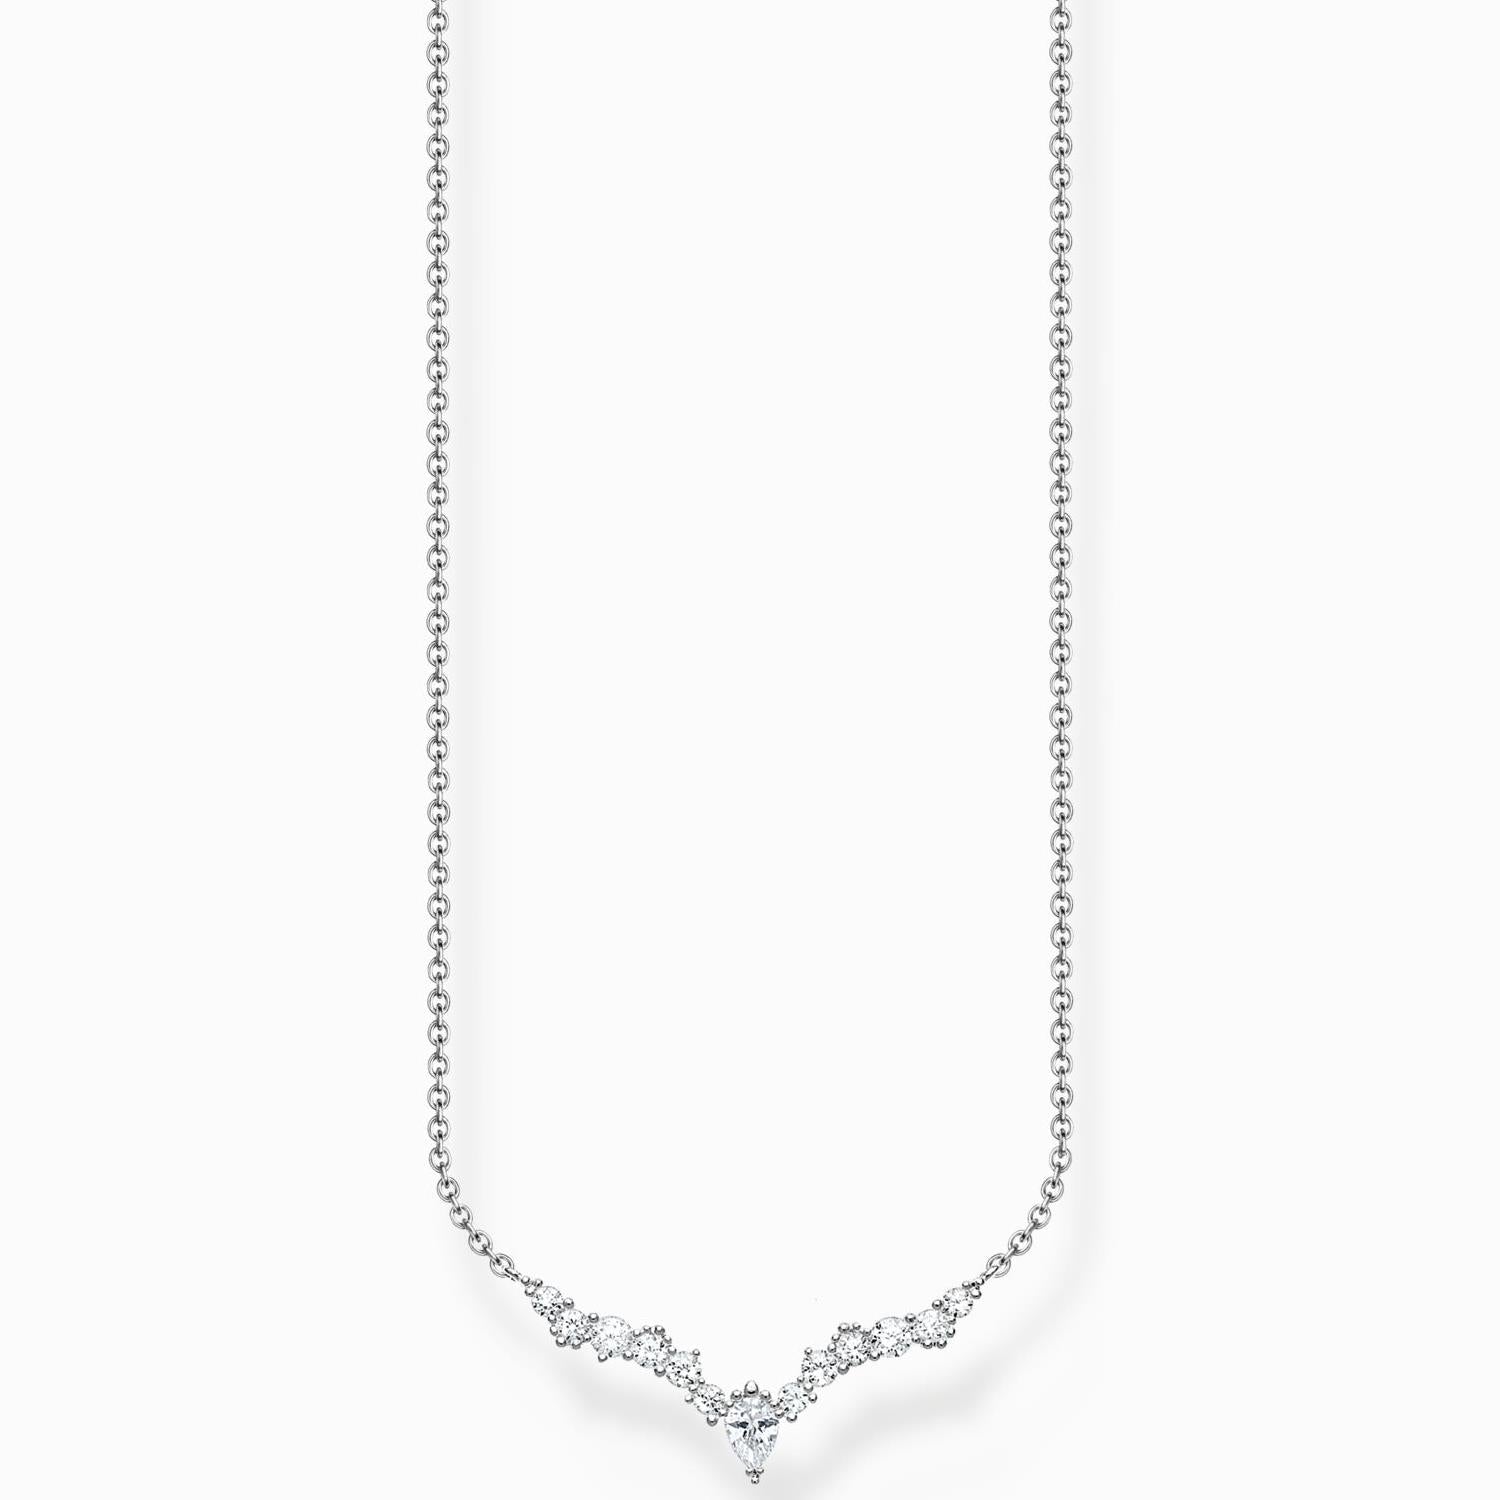 Thomas Sabo Silver Ice Crystal Necklace KE2172-051-14-L45V